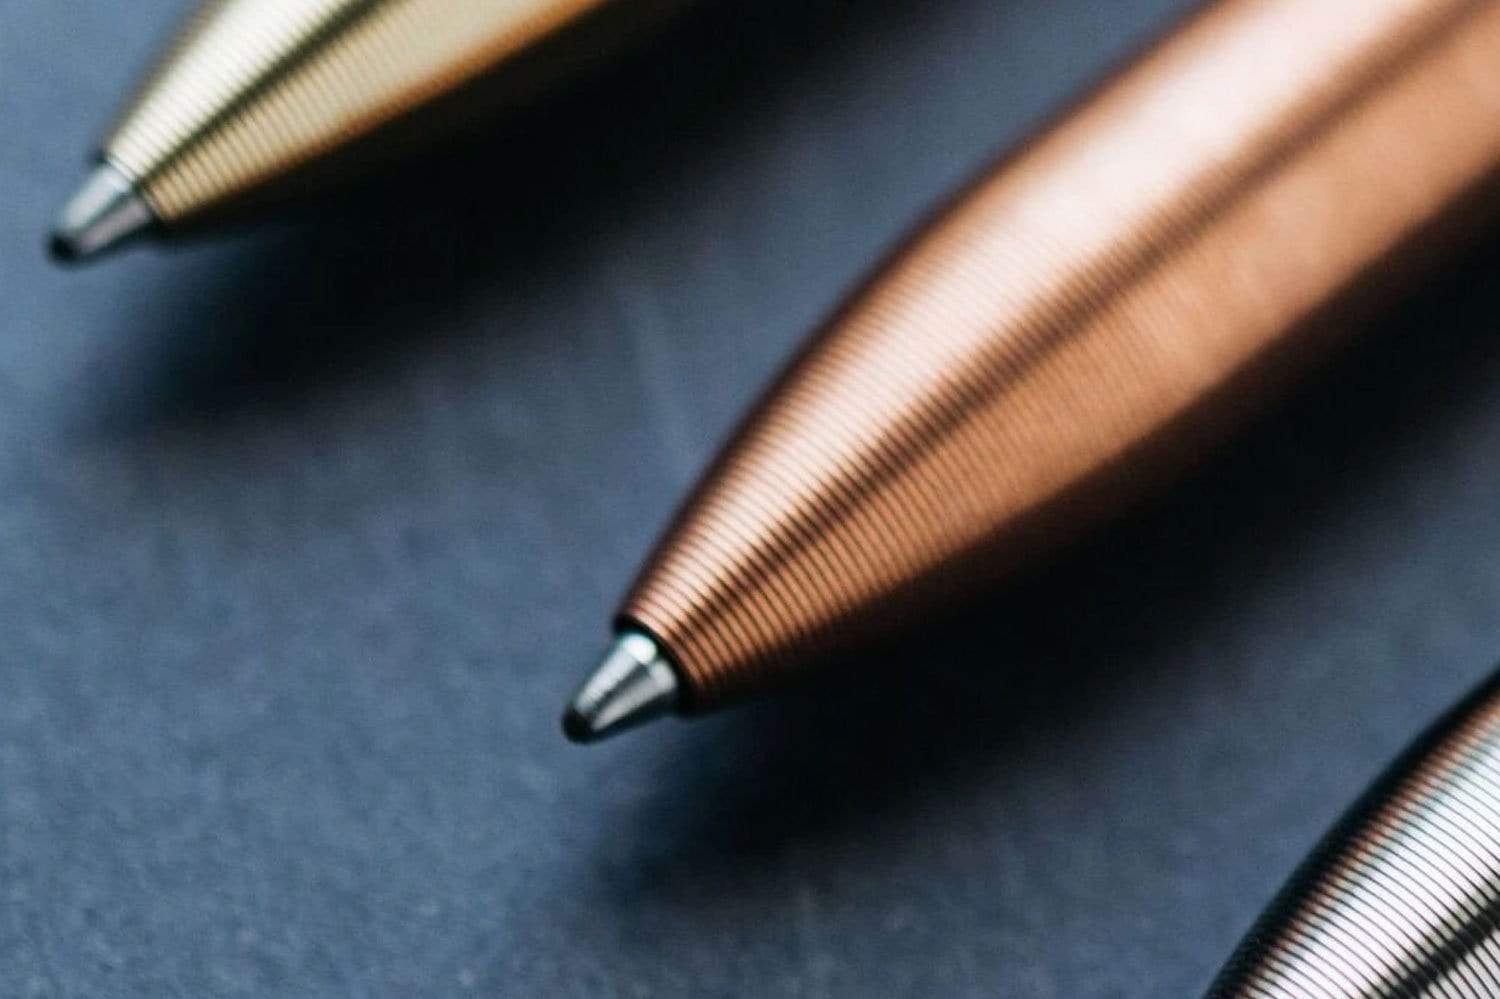 Custom Tactile Turn Copper Bolt Action Pen